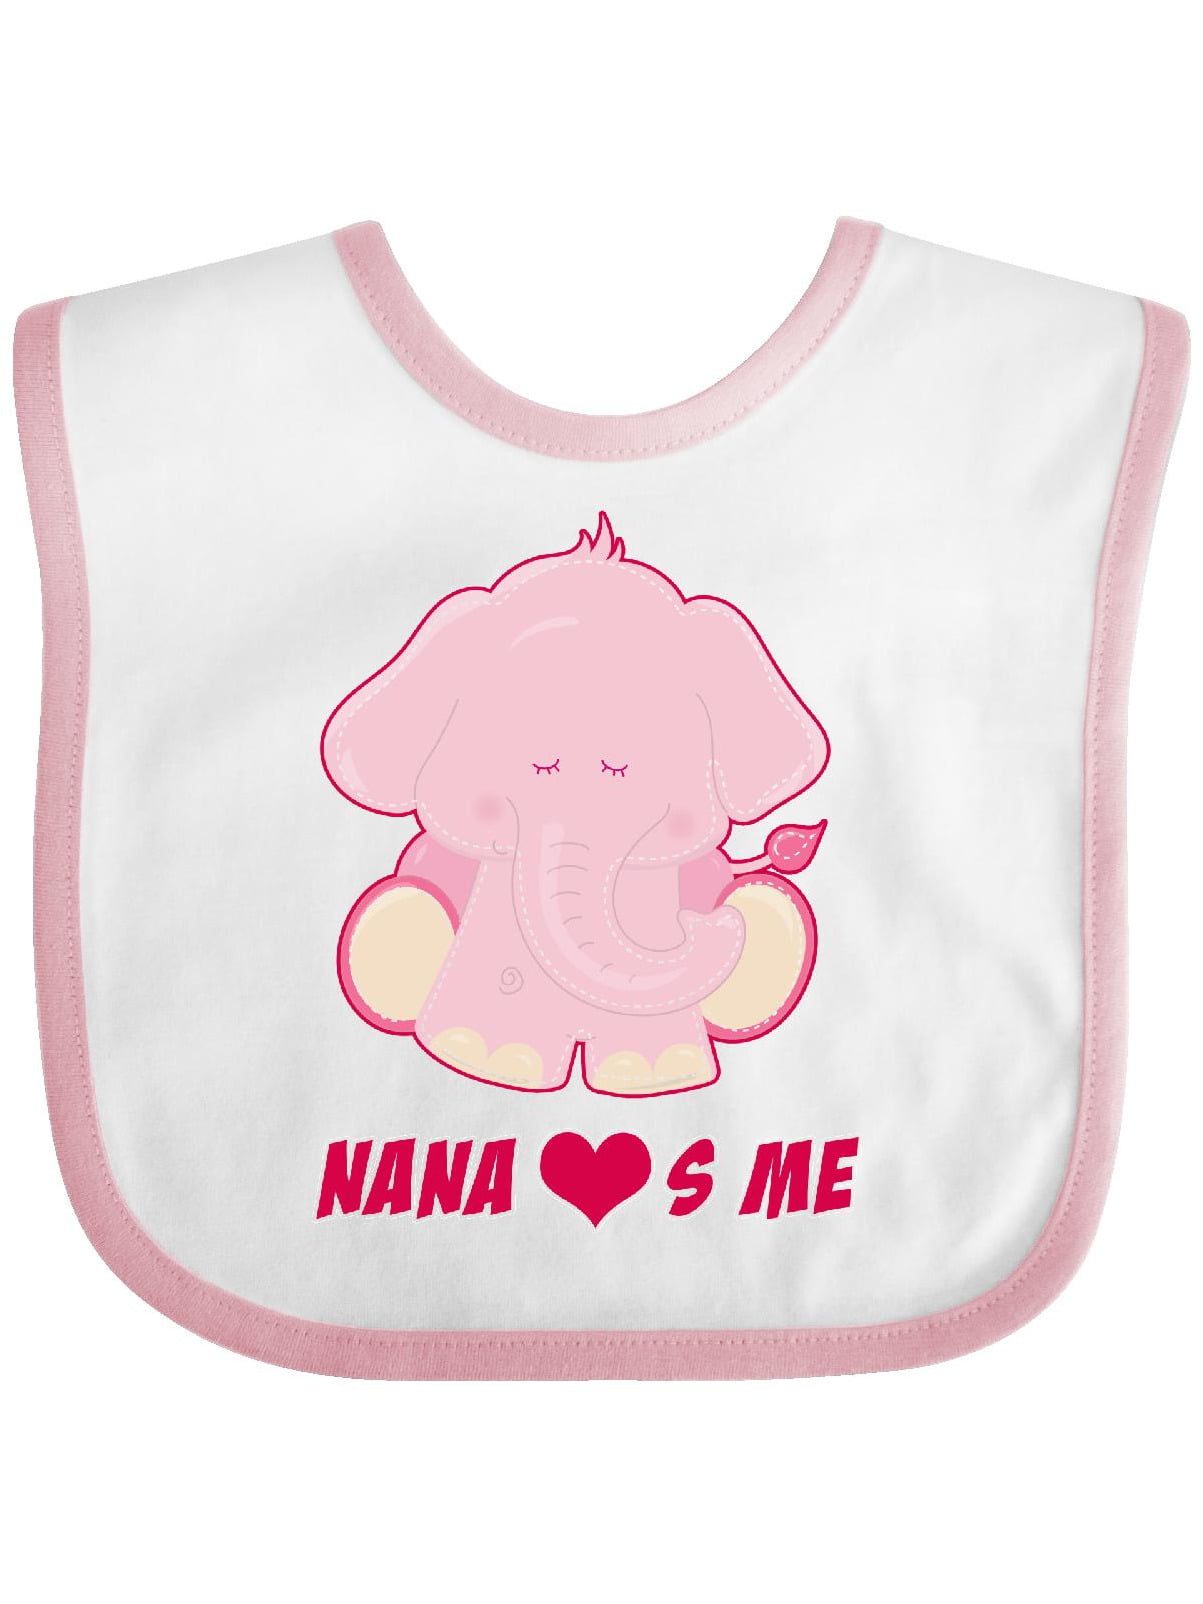 nana loves me Baby Bib - Walmart.com